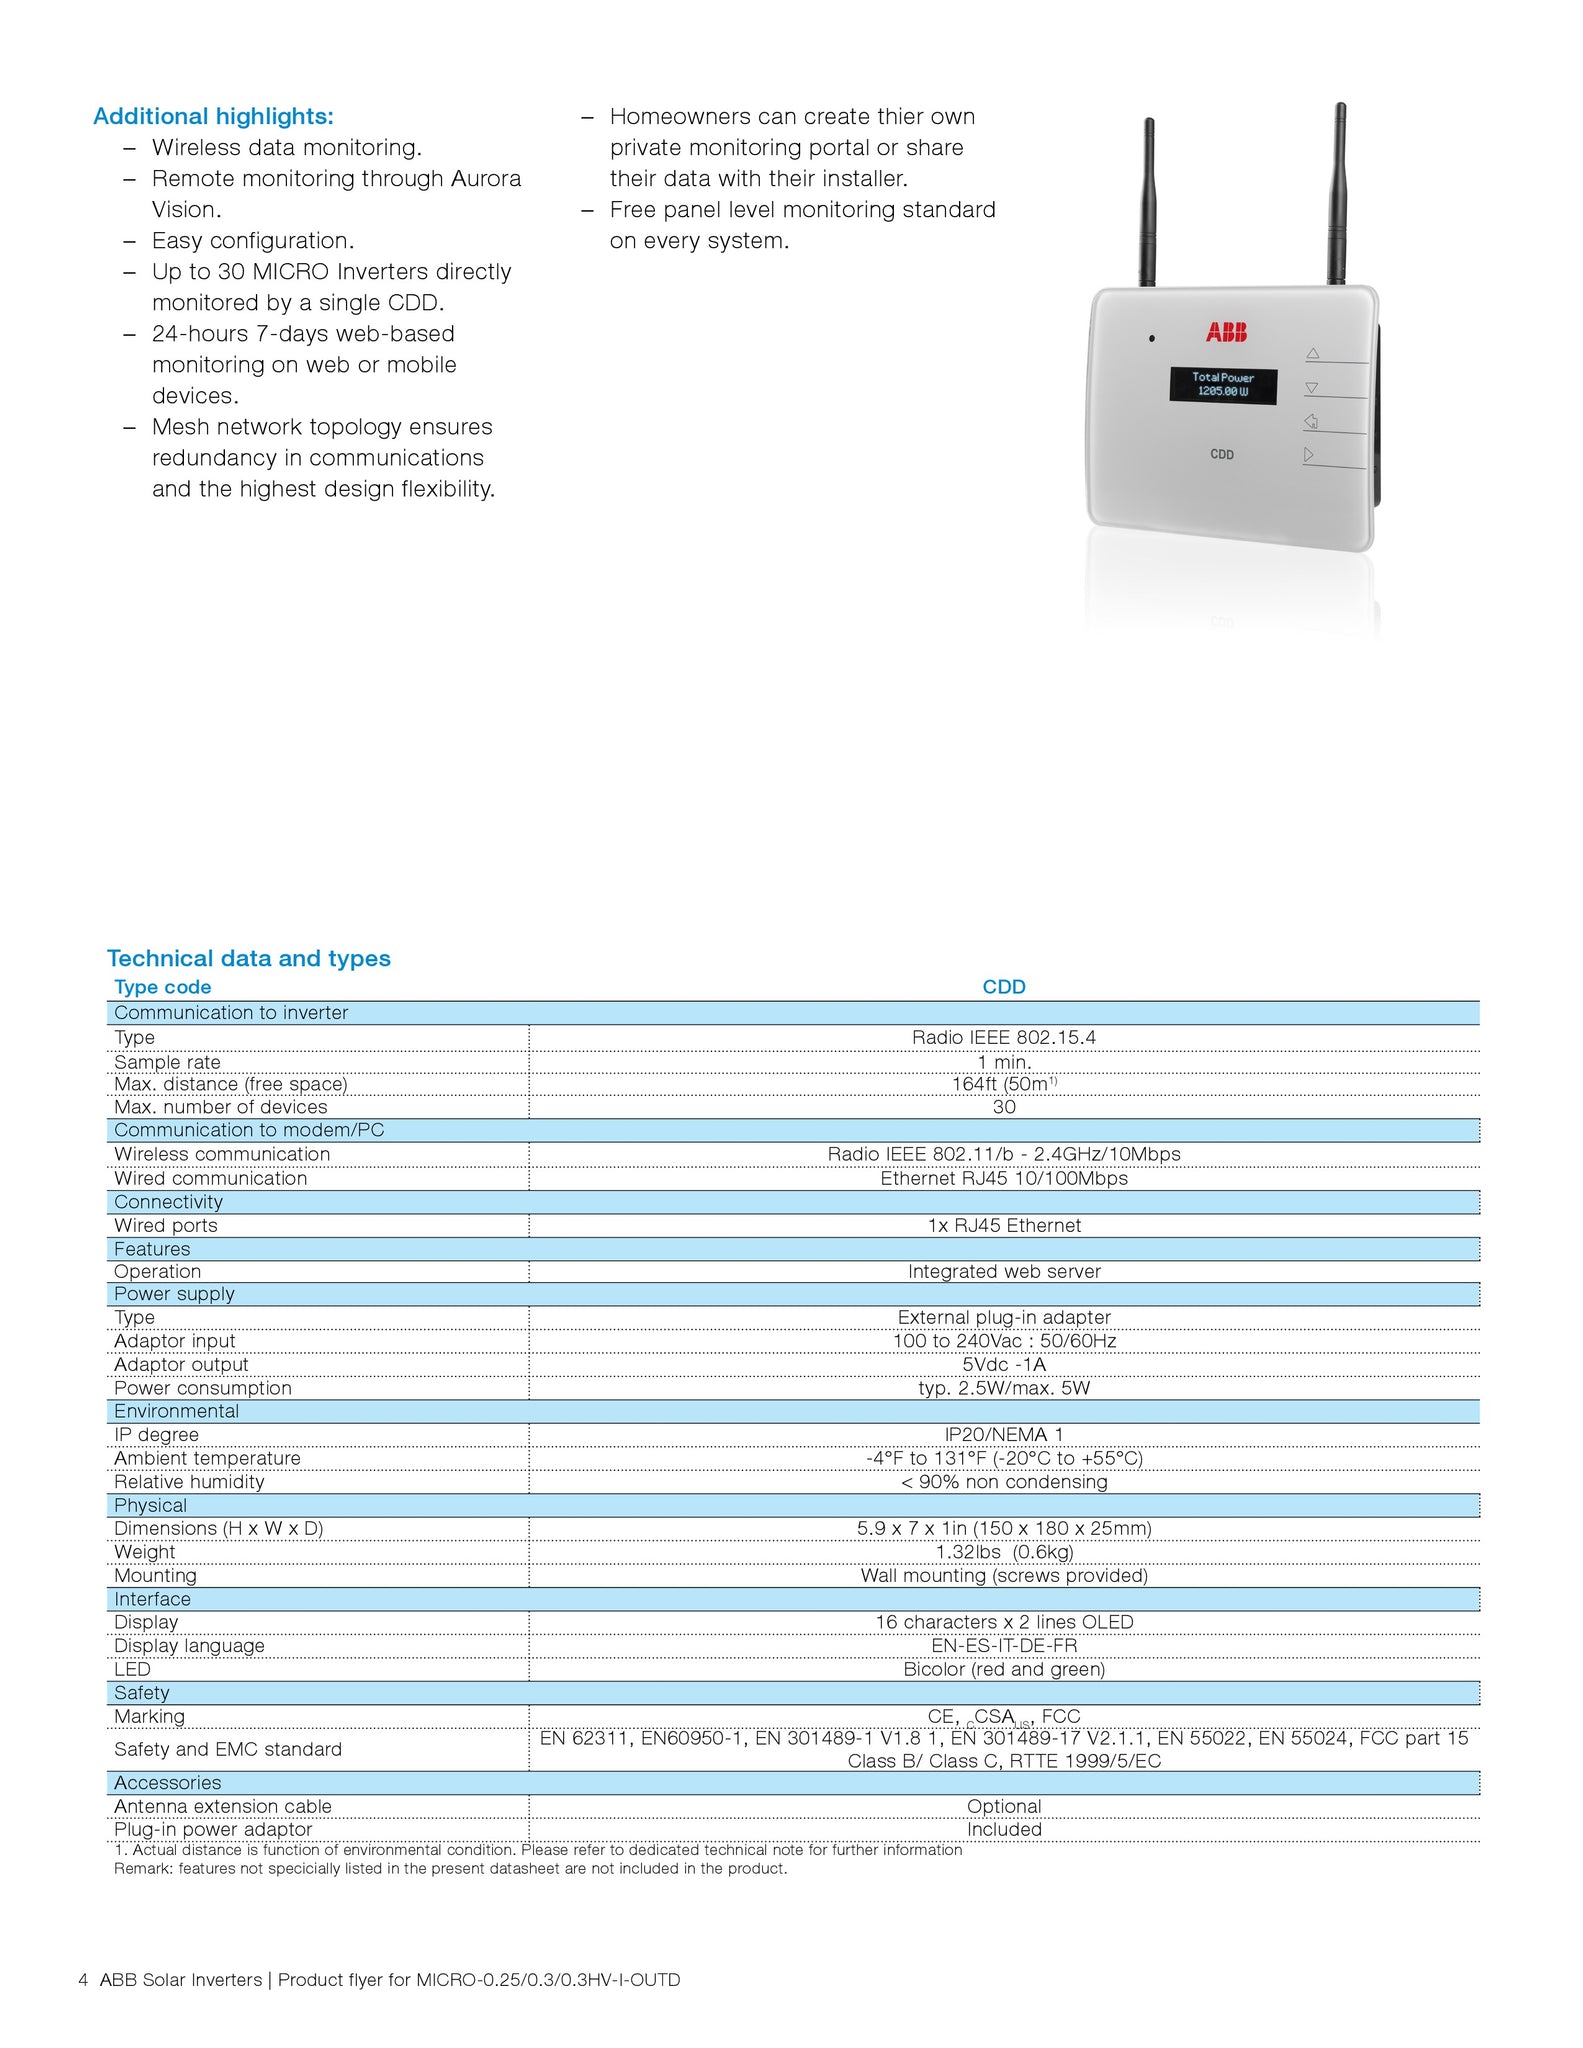 Power-One / ABB Micro 0.25-I-OUTD (250W)